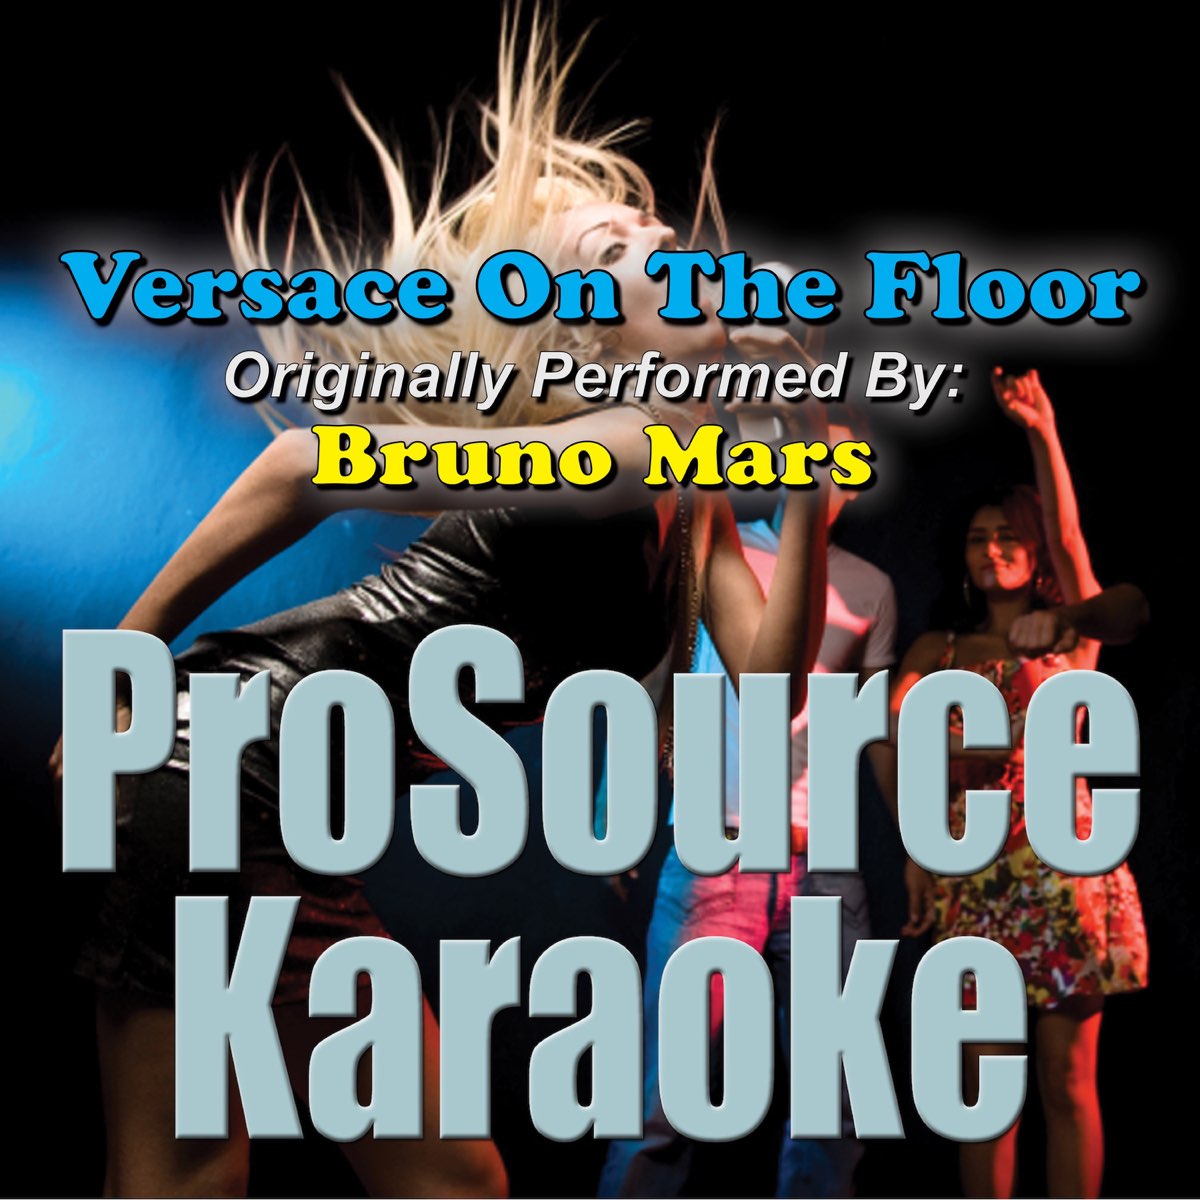 Versace On the Floor (Originally Performed By Bruno Mars) [Karaoke Version]  - Single by ProSource Karaoke Band on Apple Music